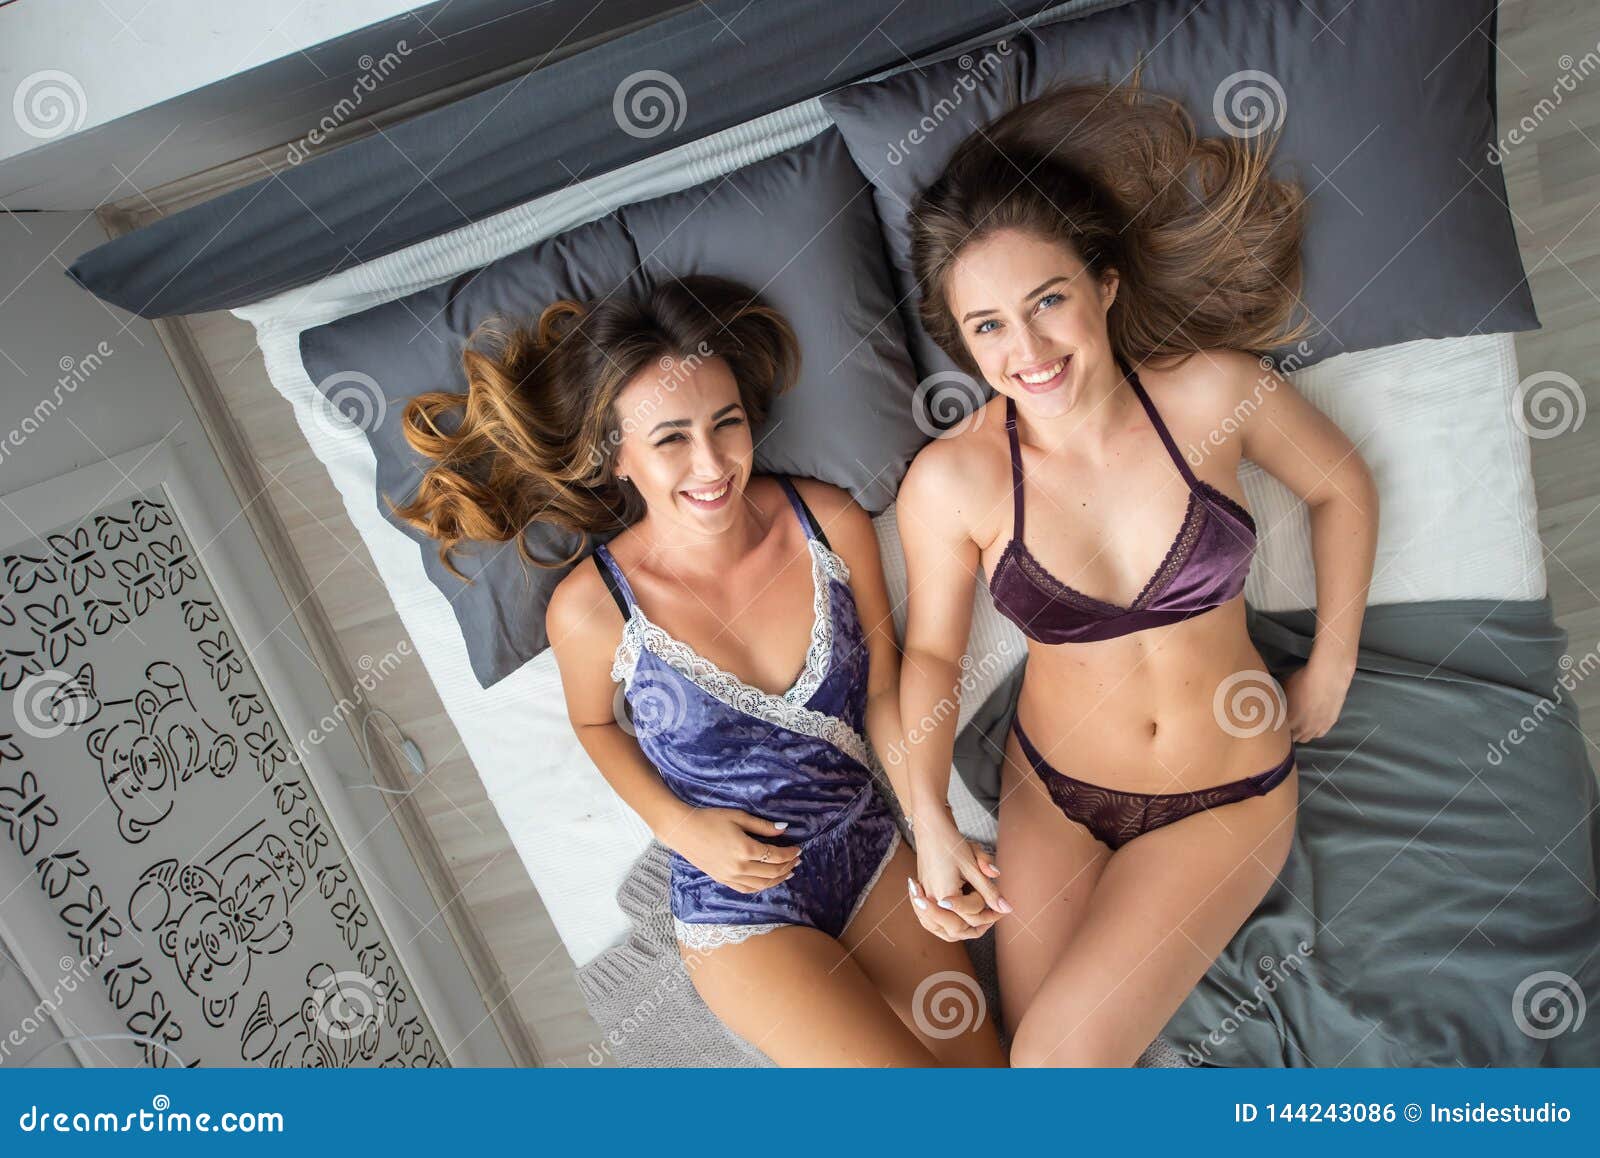 Lesbian Bikini Girls Kissing